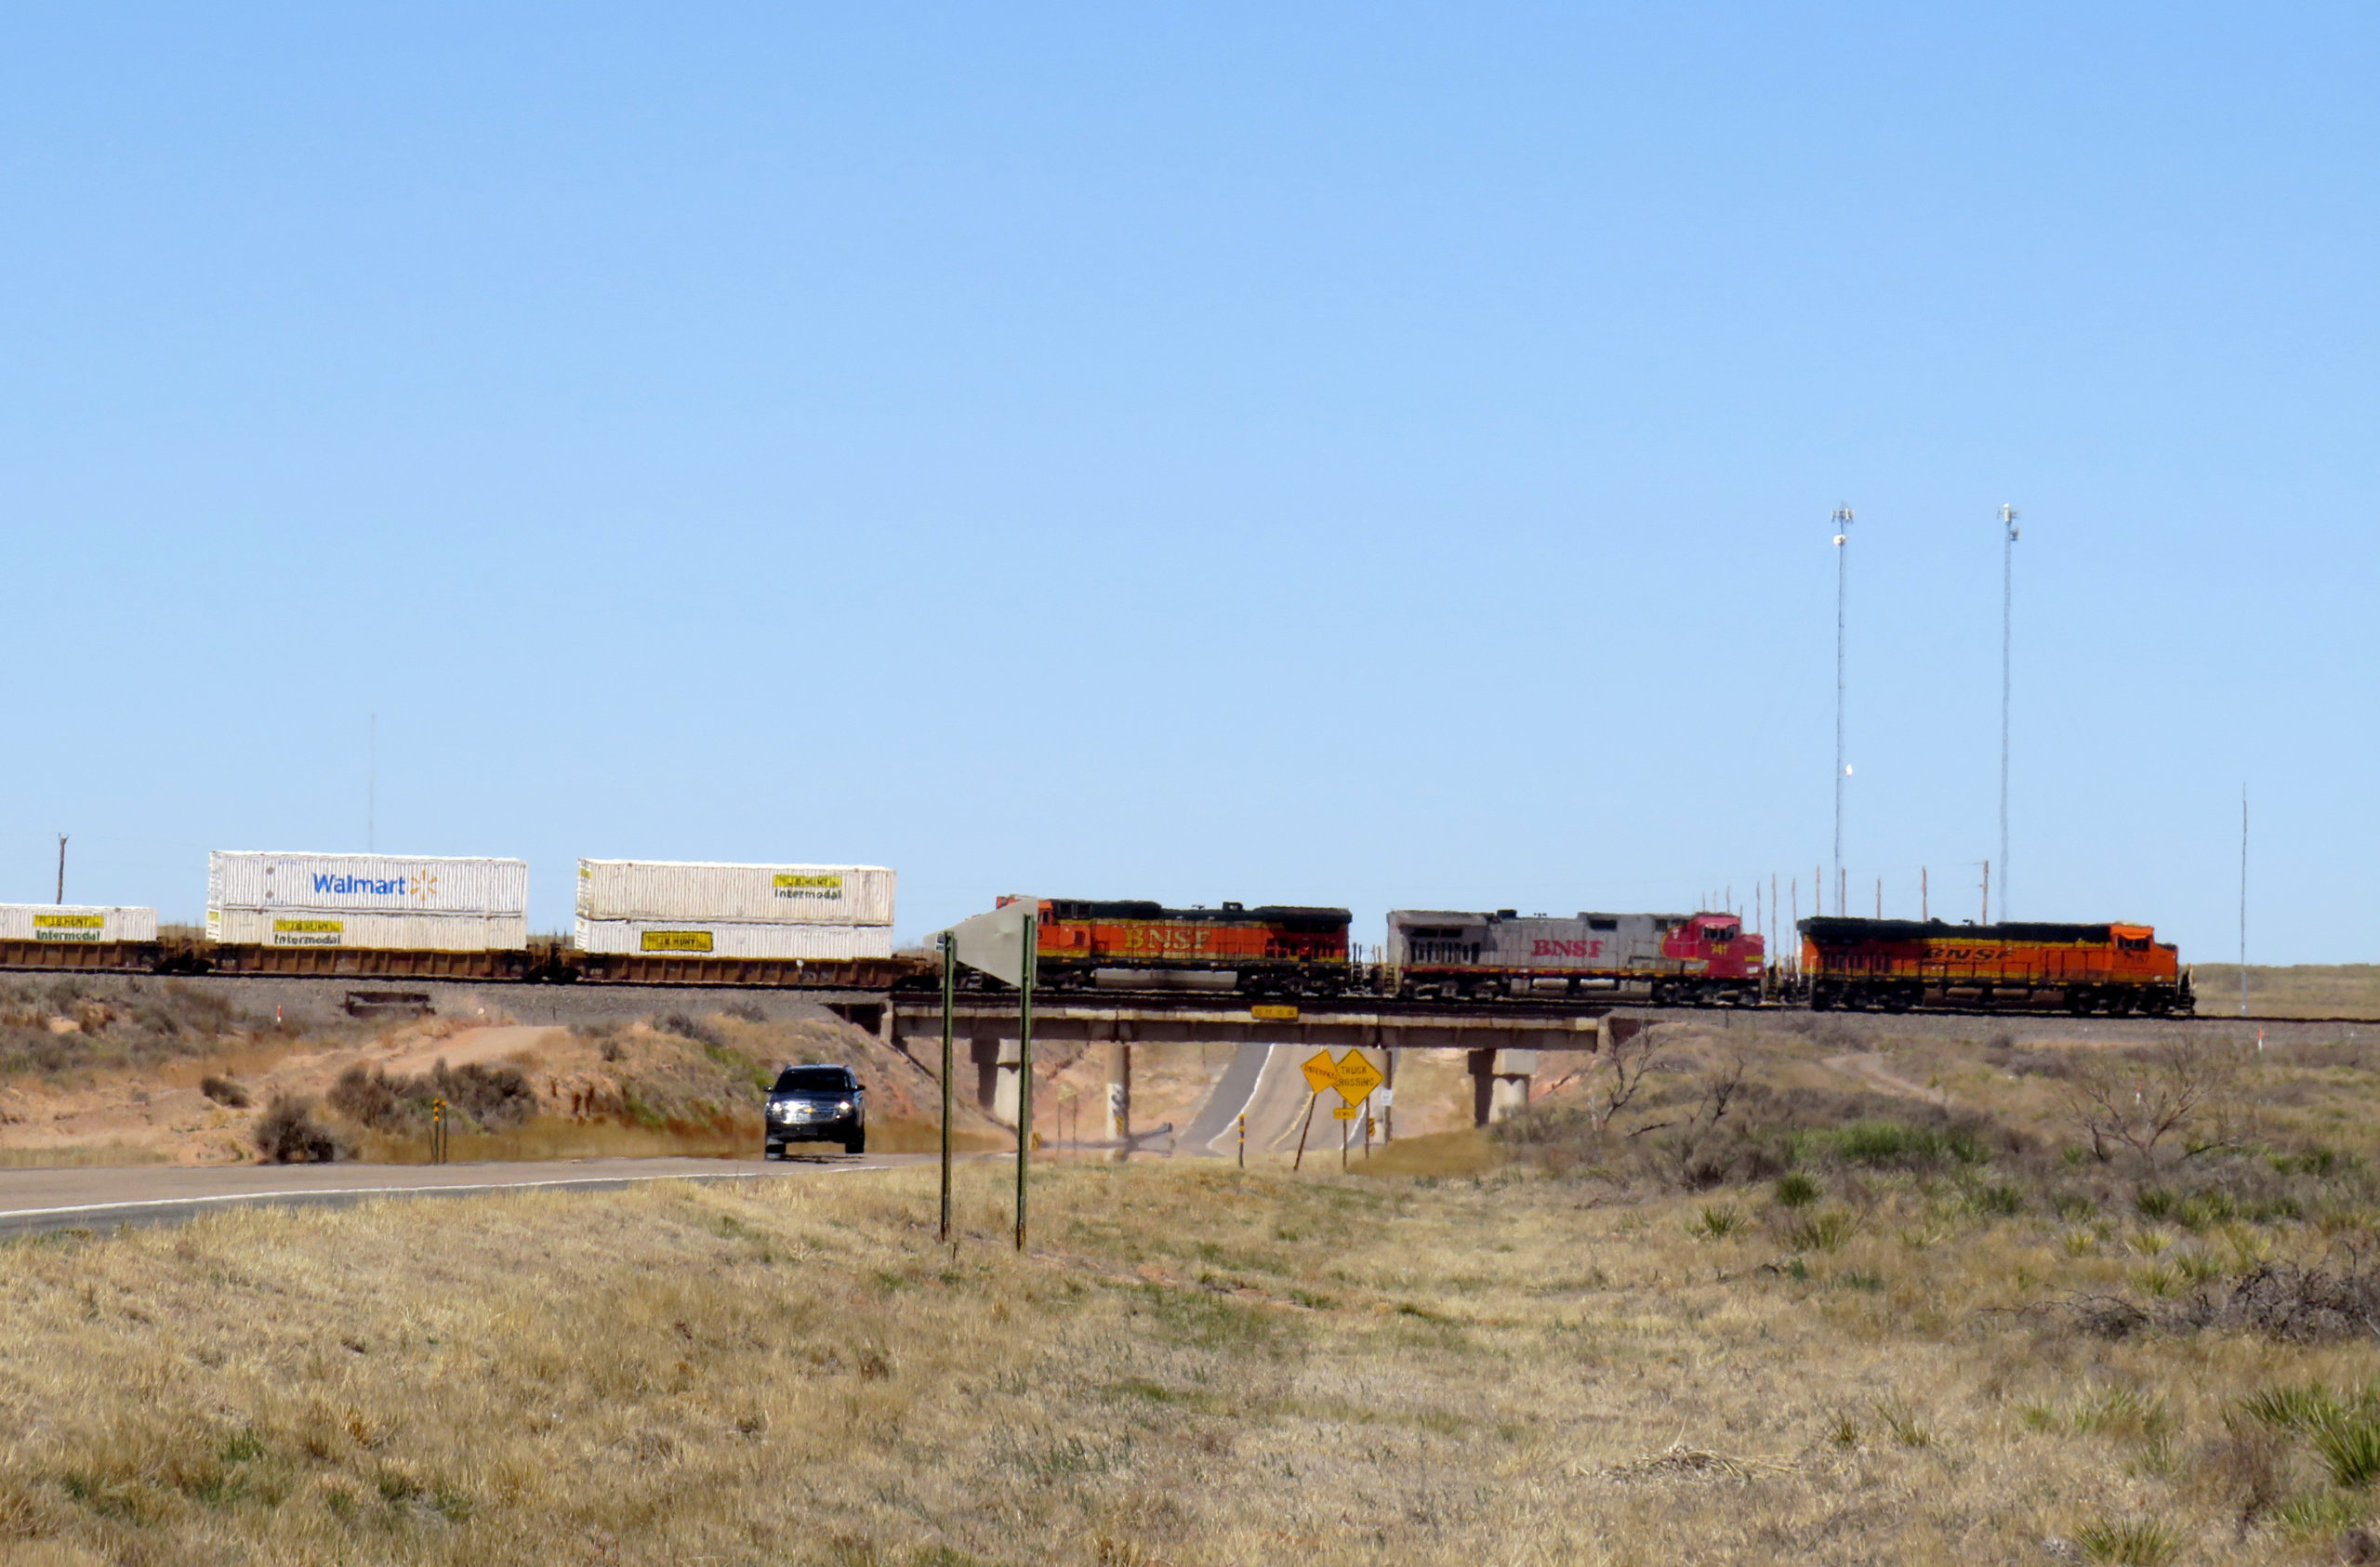 NM gets $31 million for train-vehicle collision mitigation in Santa Teresa